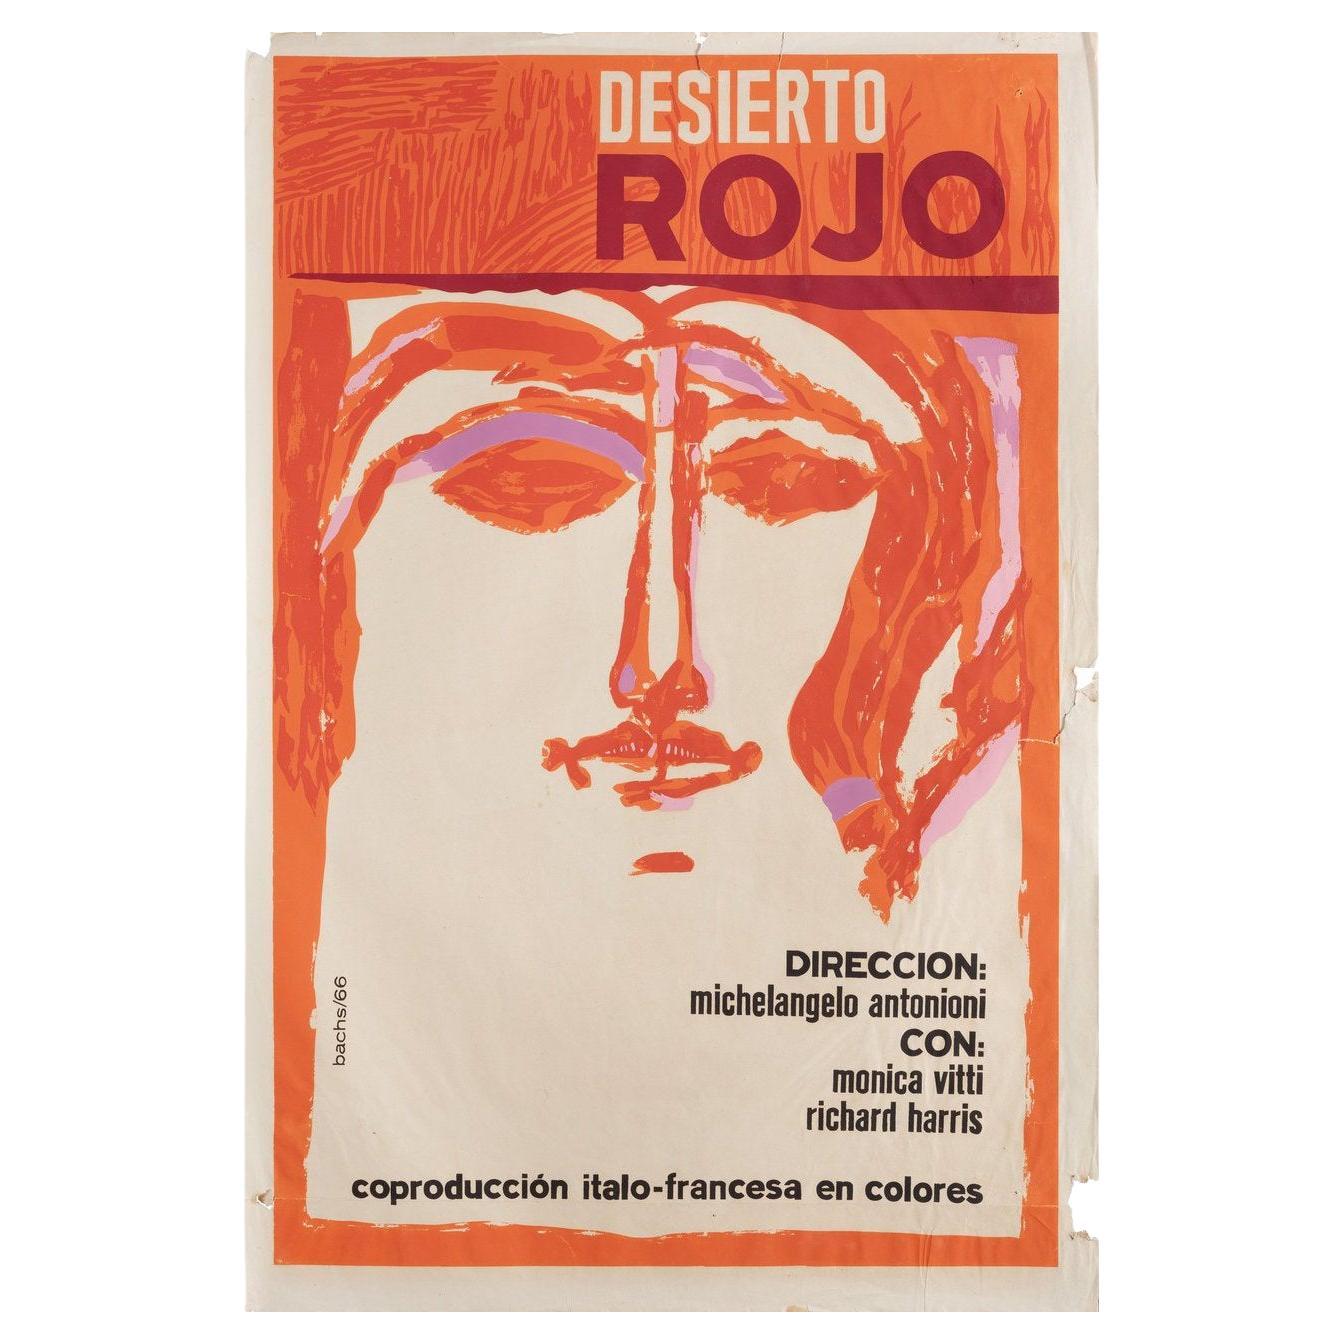 Red Desert 1966 Cuban Film Poster For Sale